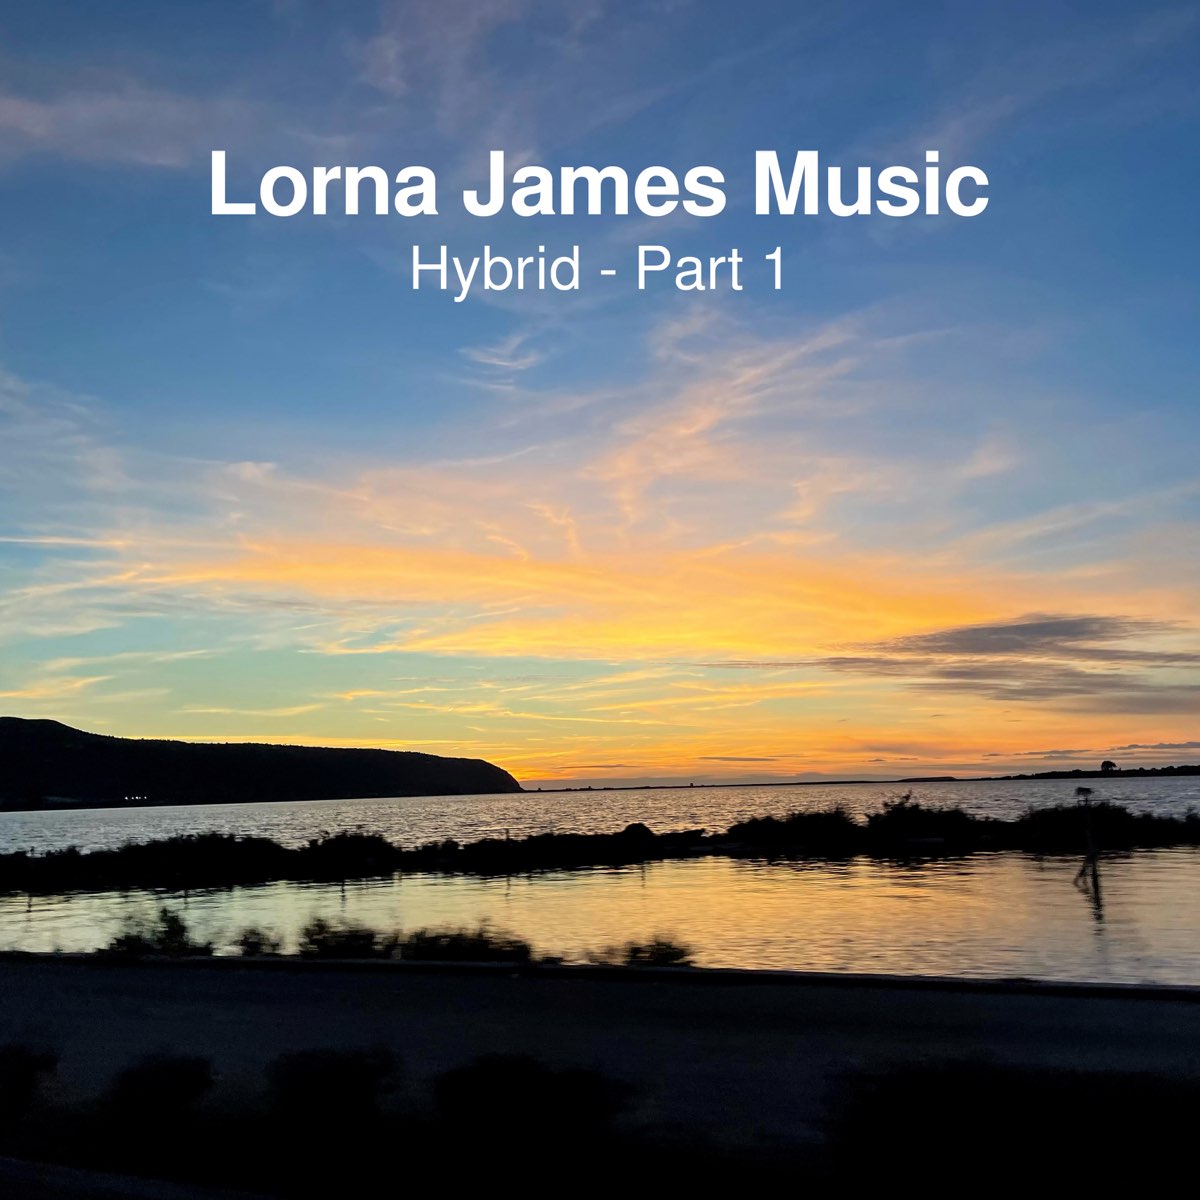 ‎Hybrid Part 1 - Single - Album by Lorna James Music - Apple Music